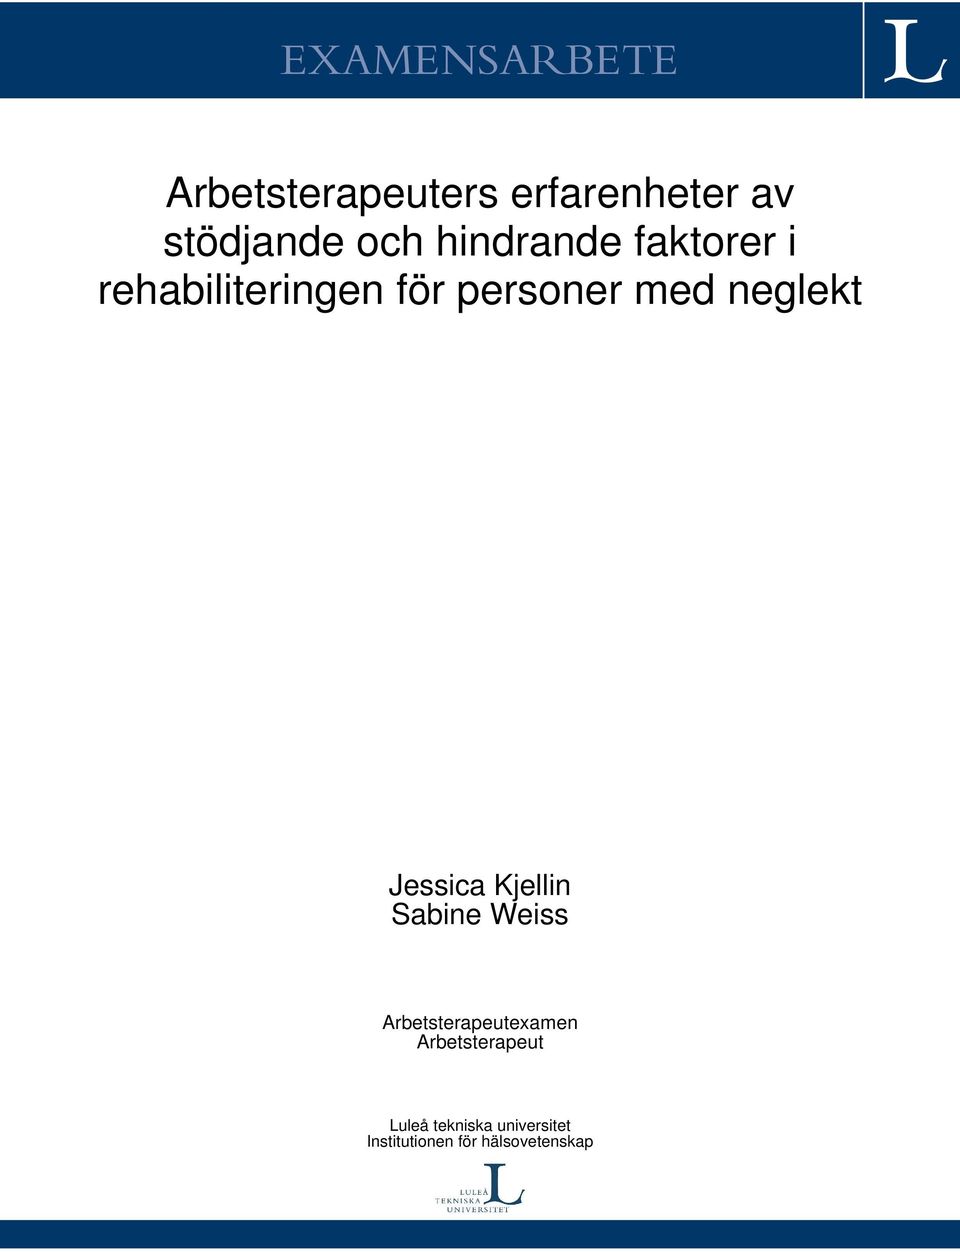 Jessica Kjellin Sabine Weiss Arbetsterapeutexamen